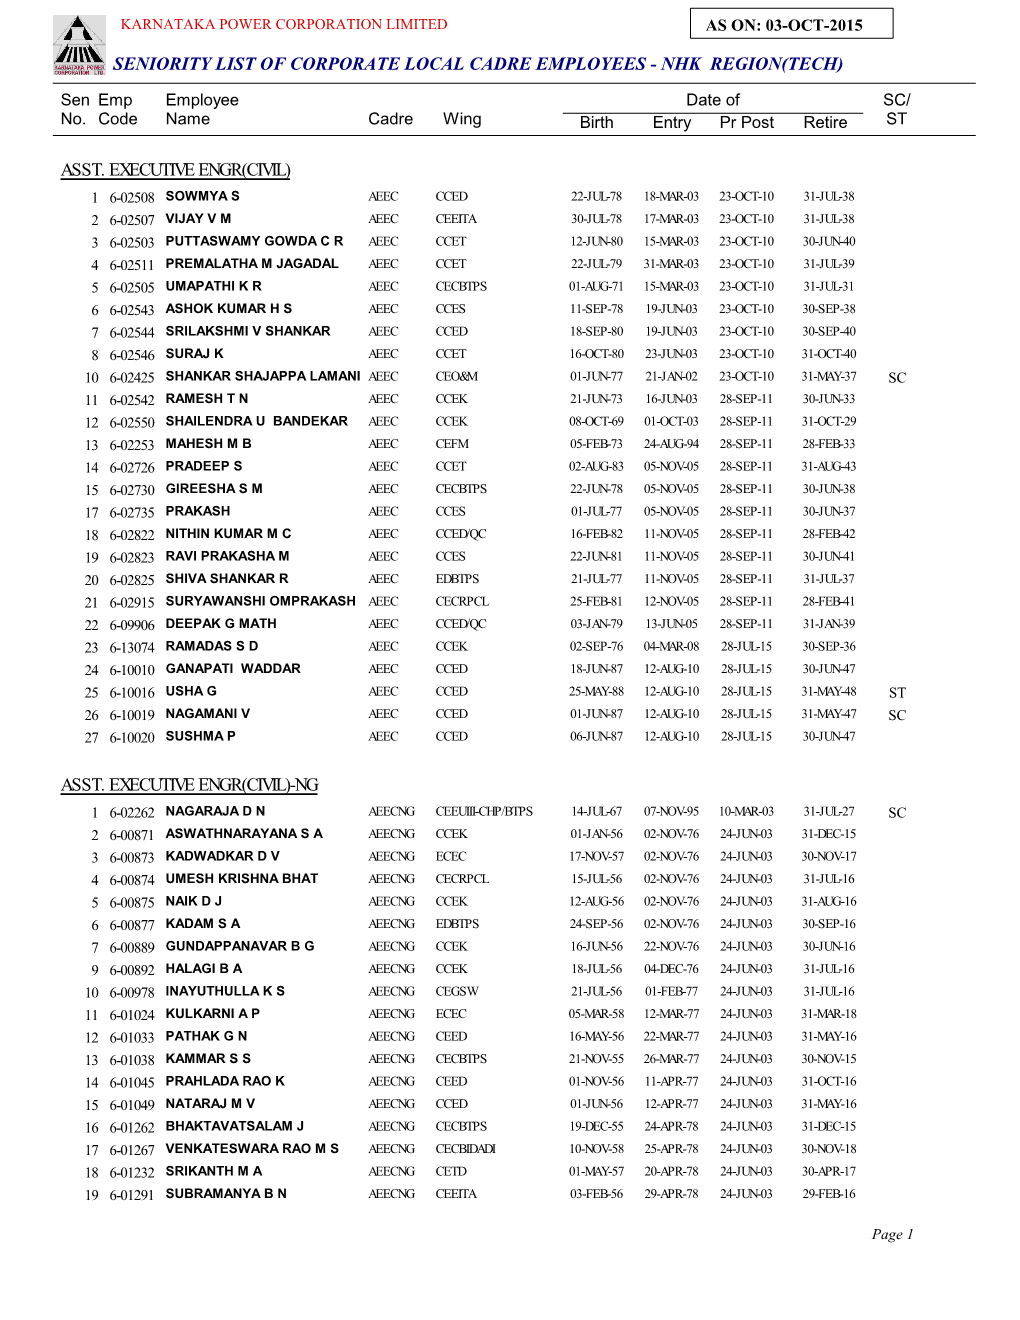 Seniority List of Corporate Local Cadre Employees - Nhk Region(Tech)